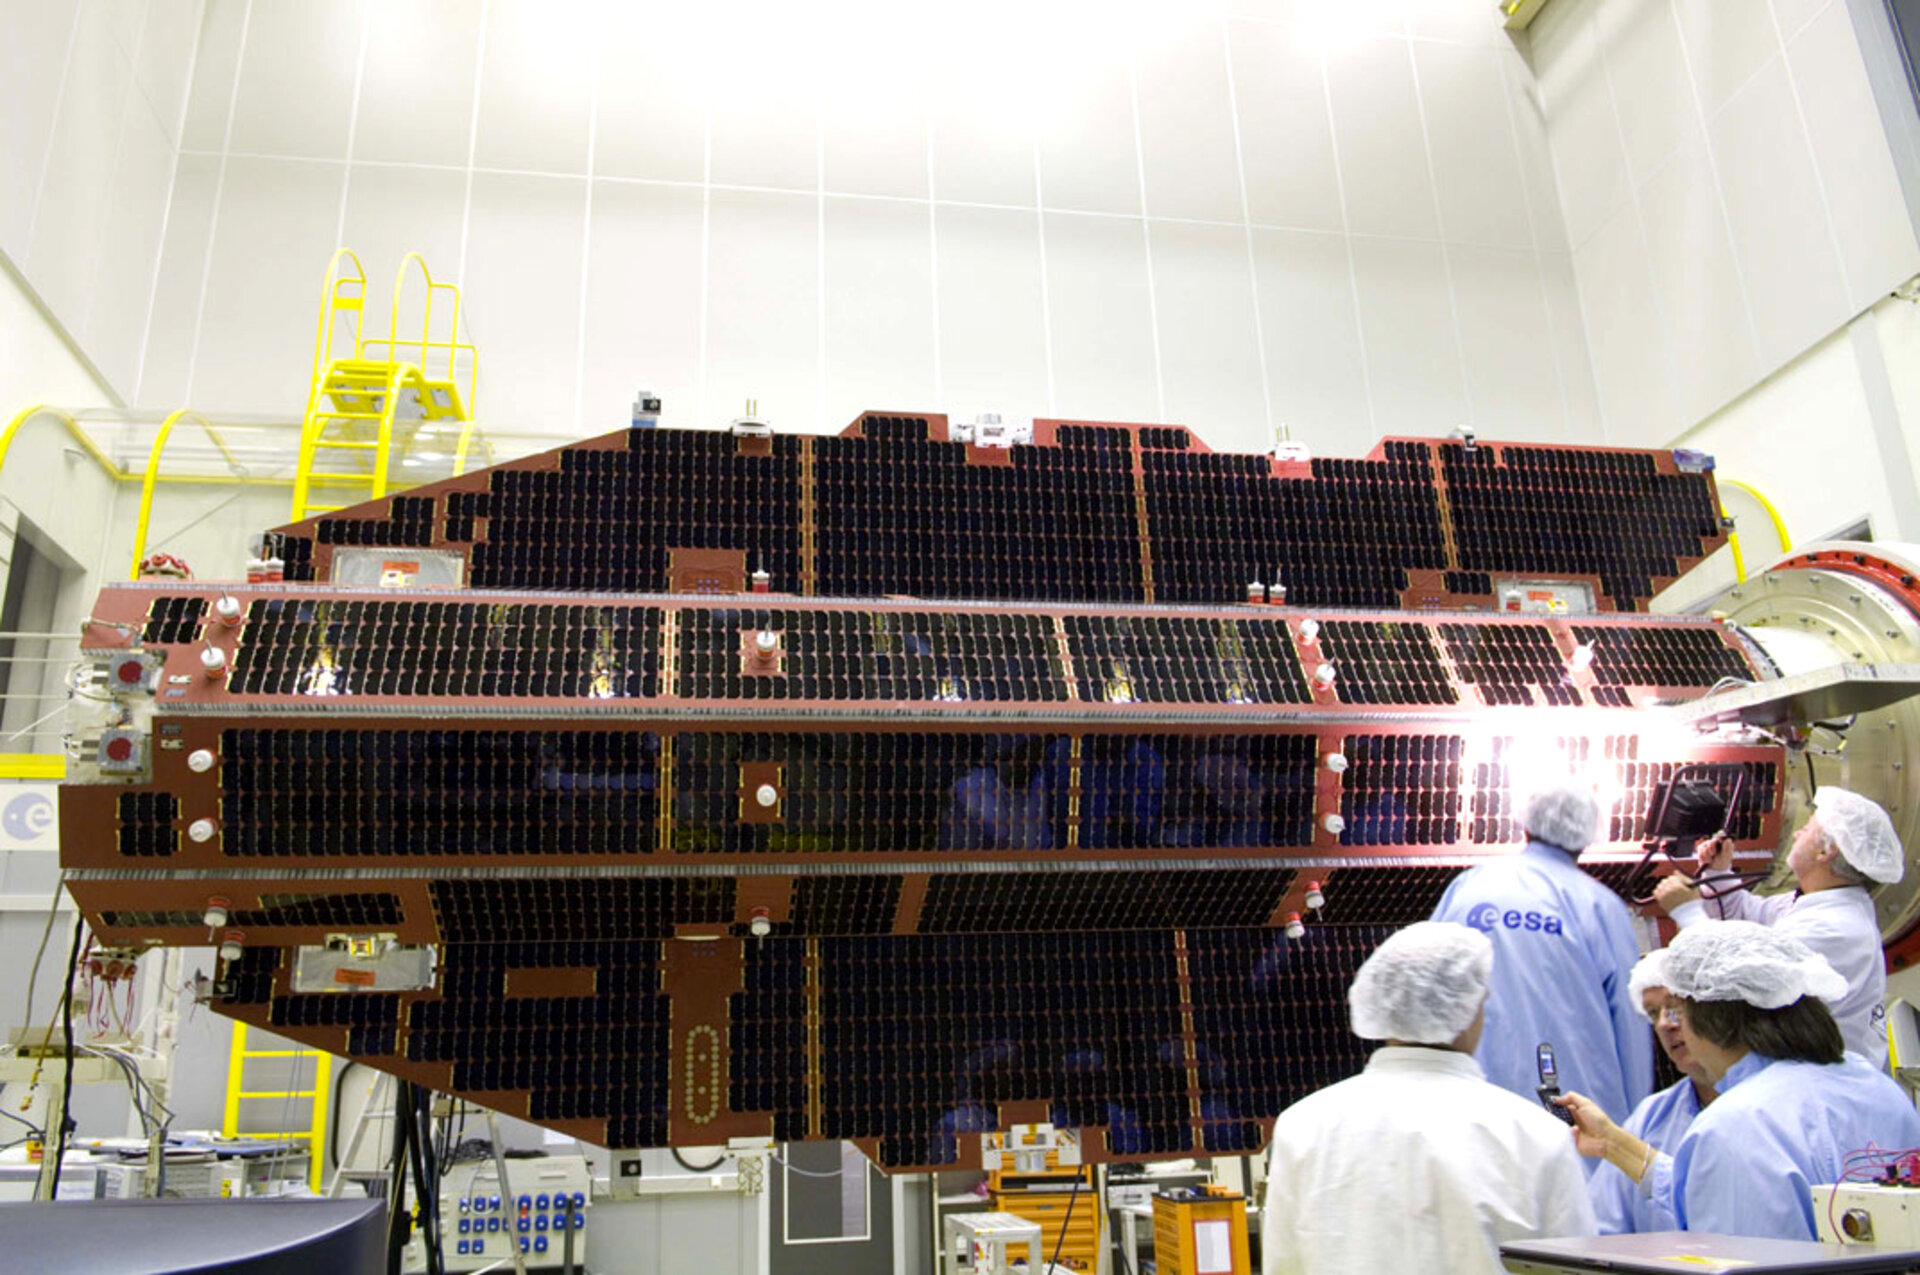 GOCE in ESA's test facilities